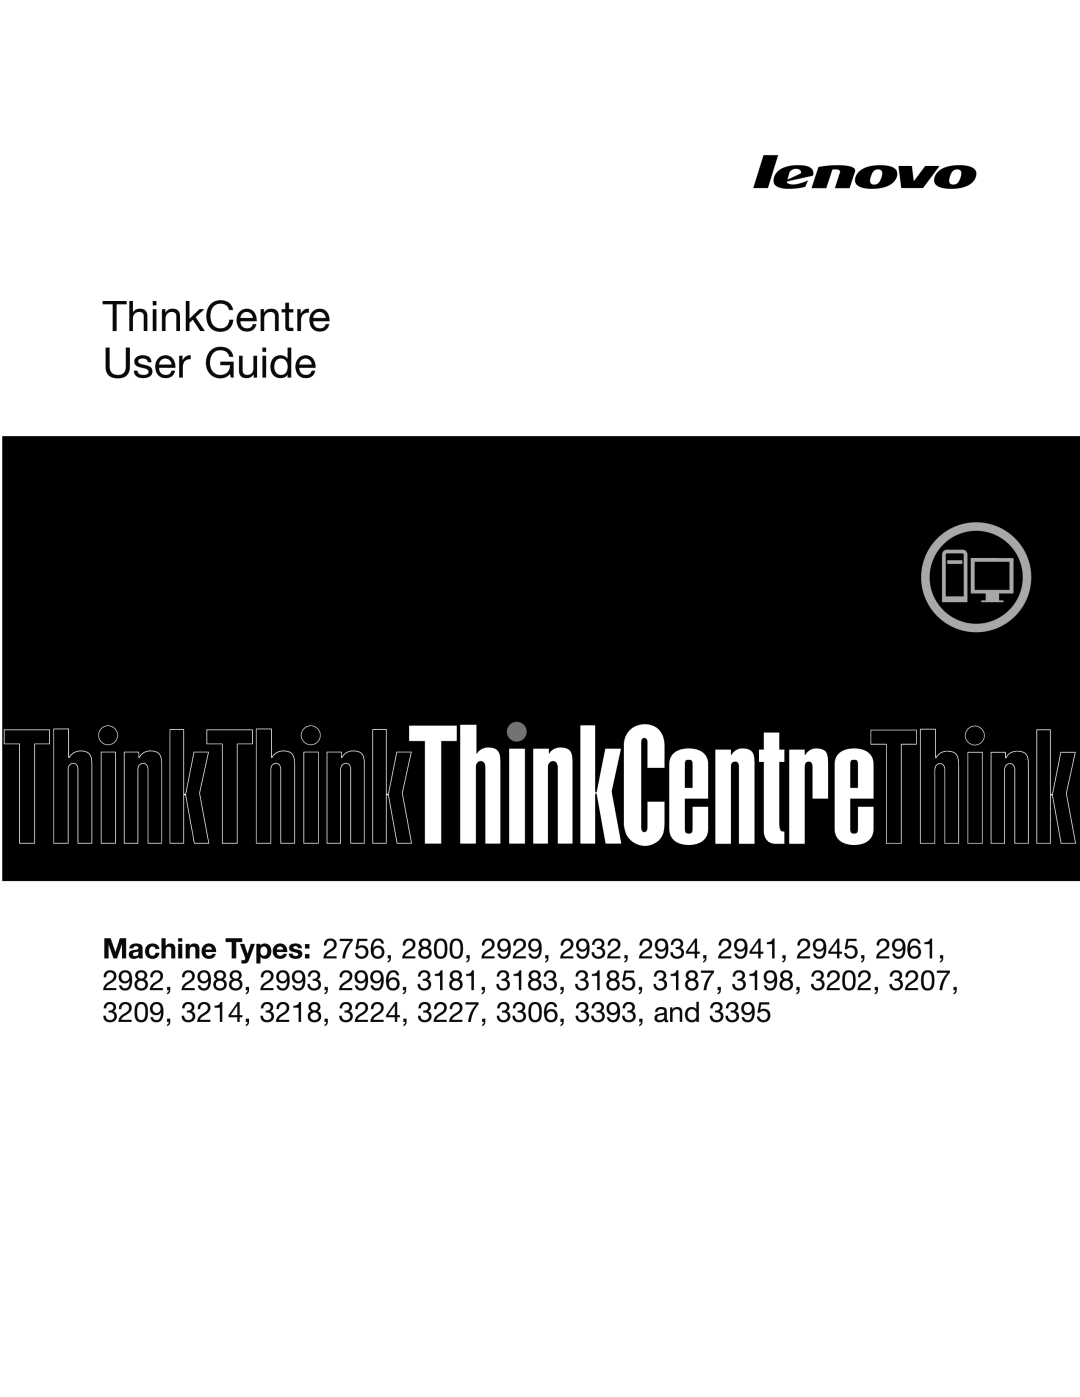 Lenovo 2992E5U, 2988, 2982, 2993, 2996, 3393, 3395, 3306, 3224, 3202, 3187, 3214, 3185, 3207, 3209, 3198 manual ThinkCentre User Guide 